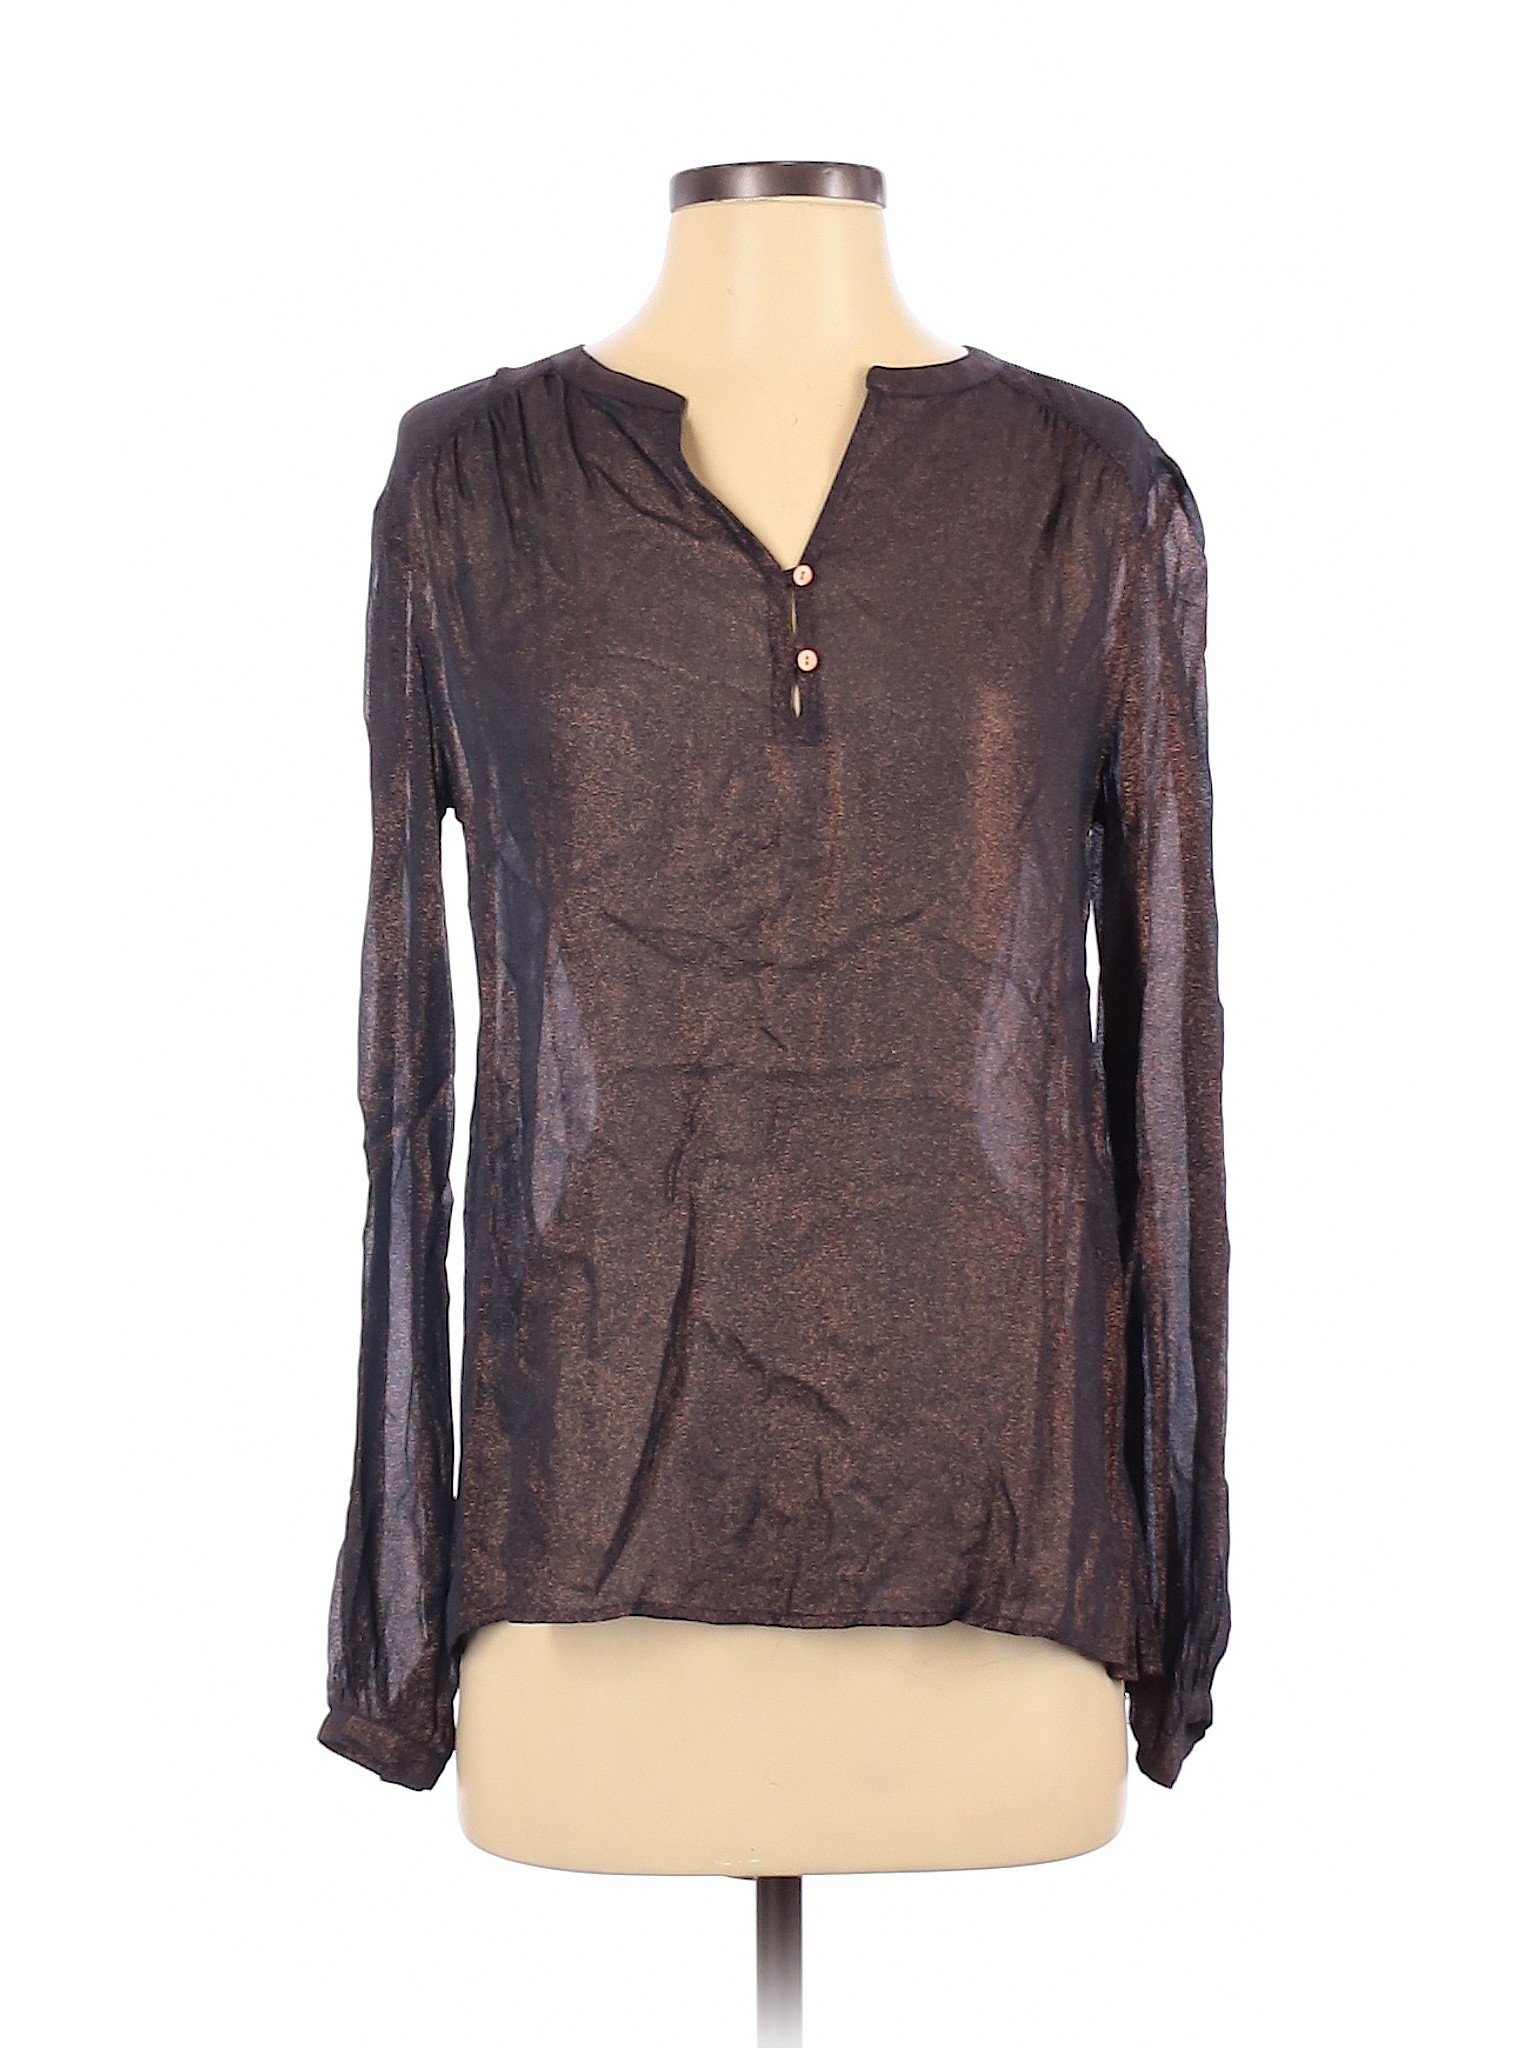 Wrap Women Brown Long Sleeve Blouse 4 | eBay